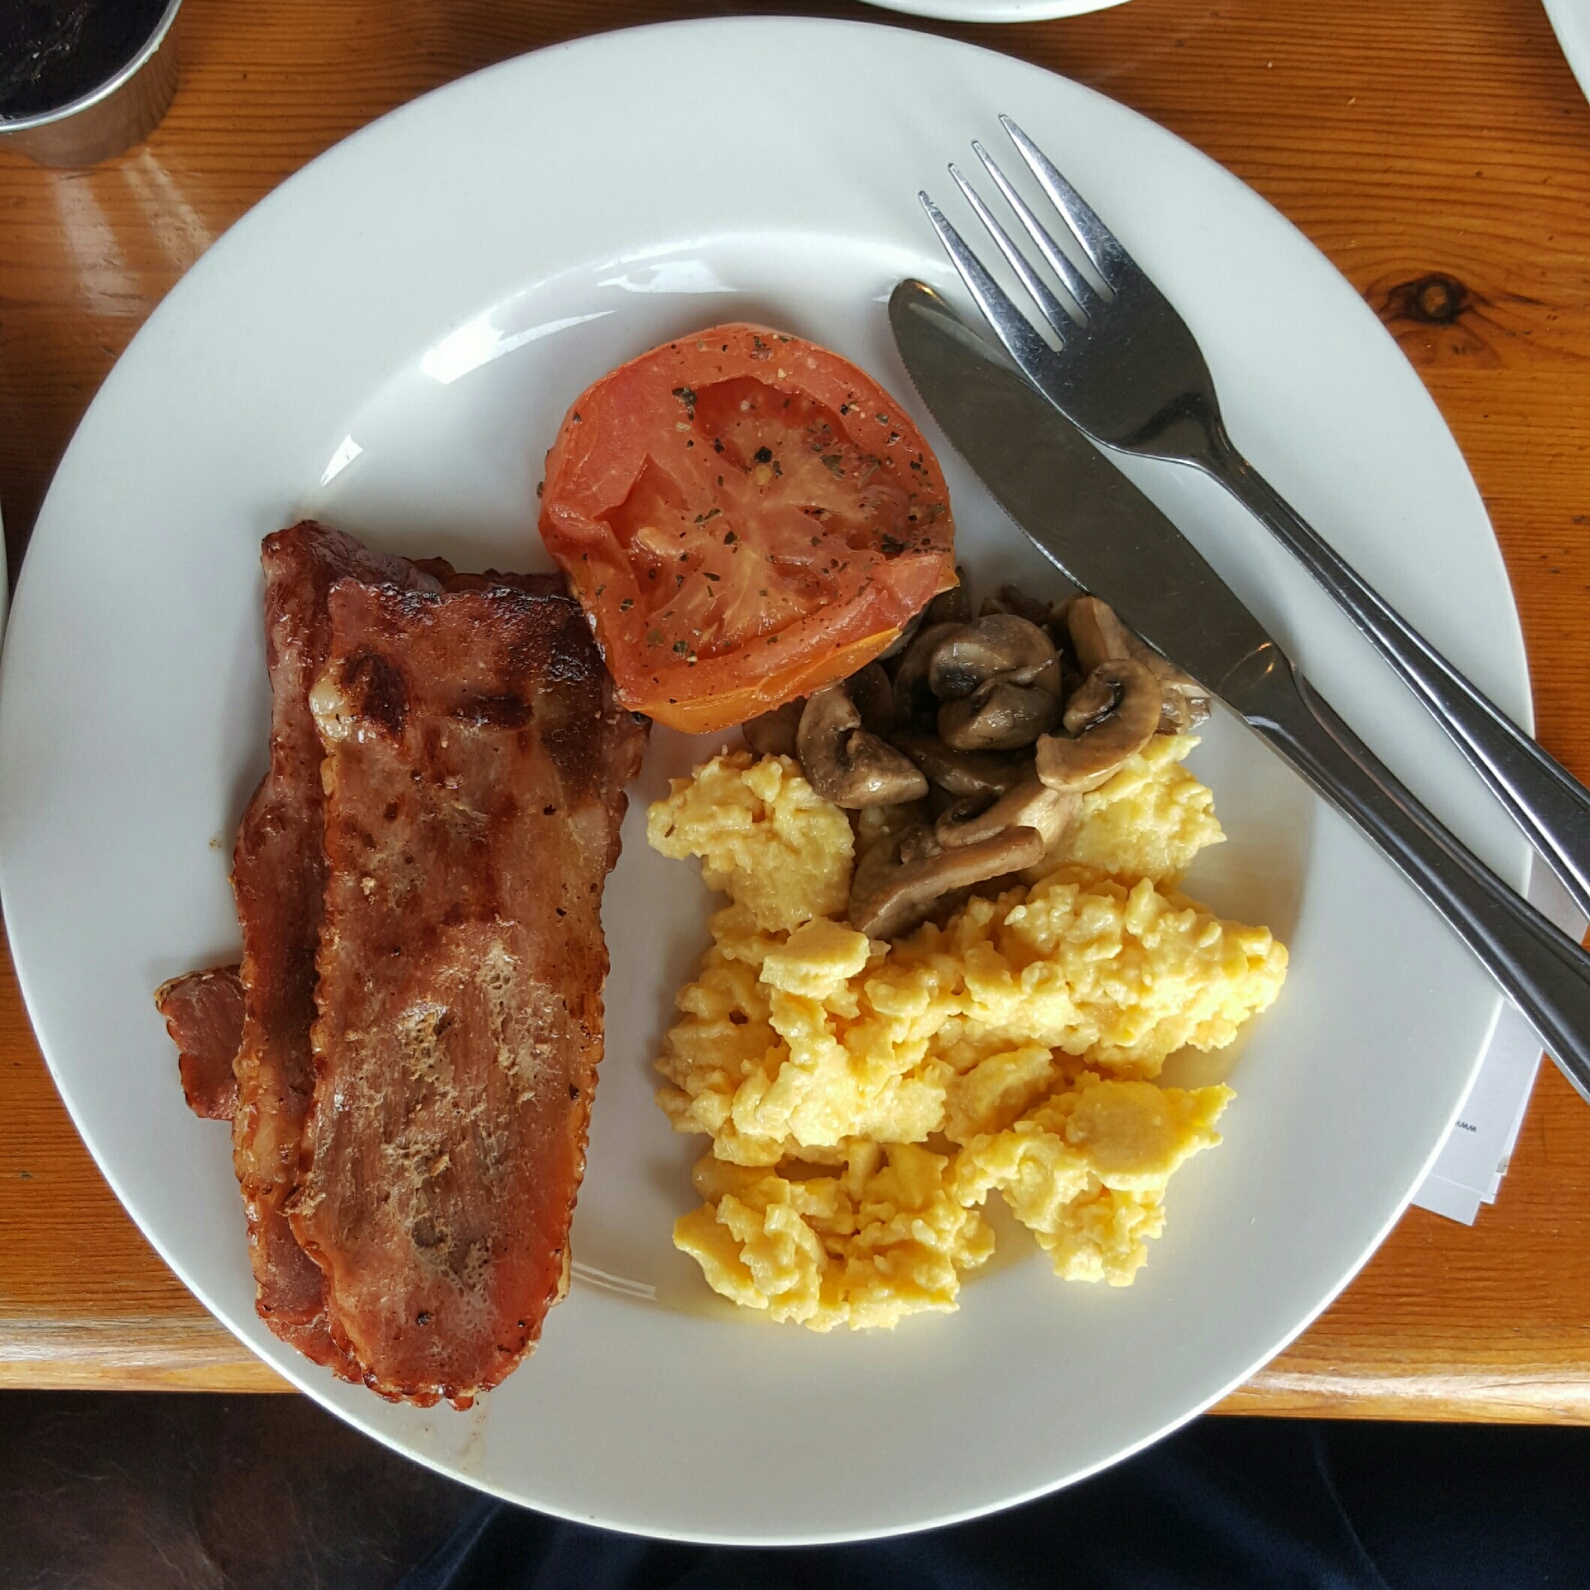 Bacon, egg, tomato and mushroom